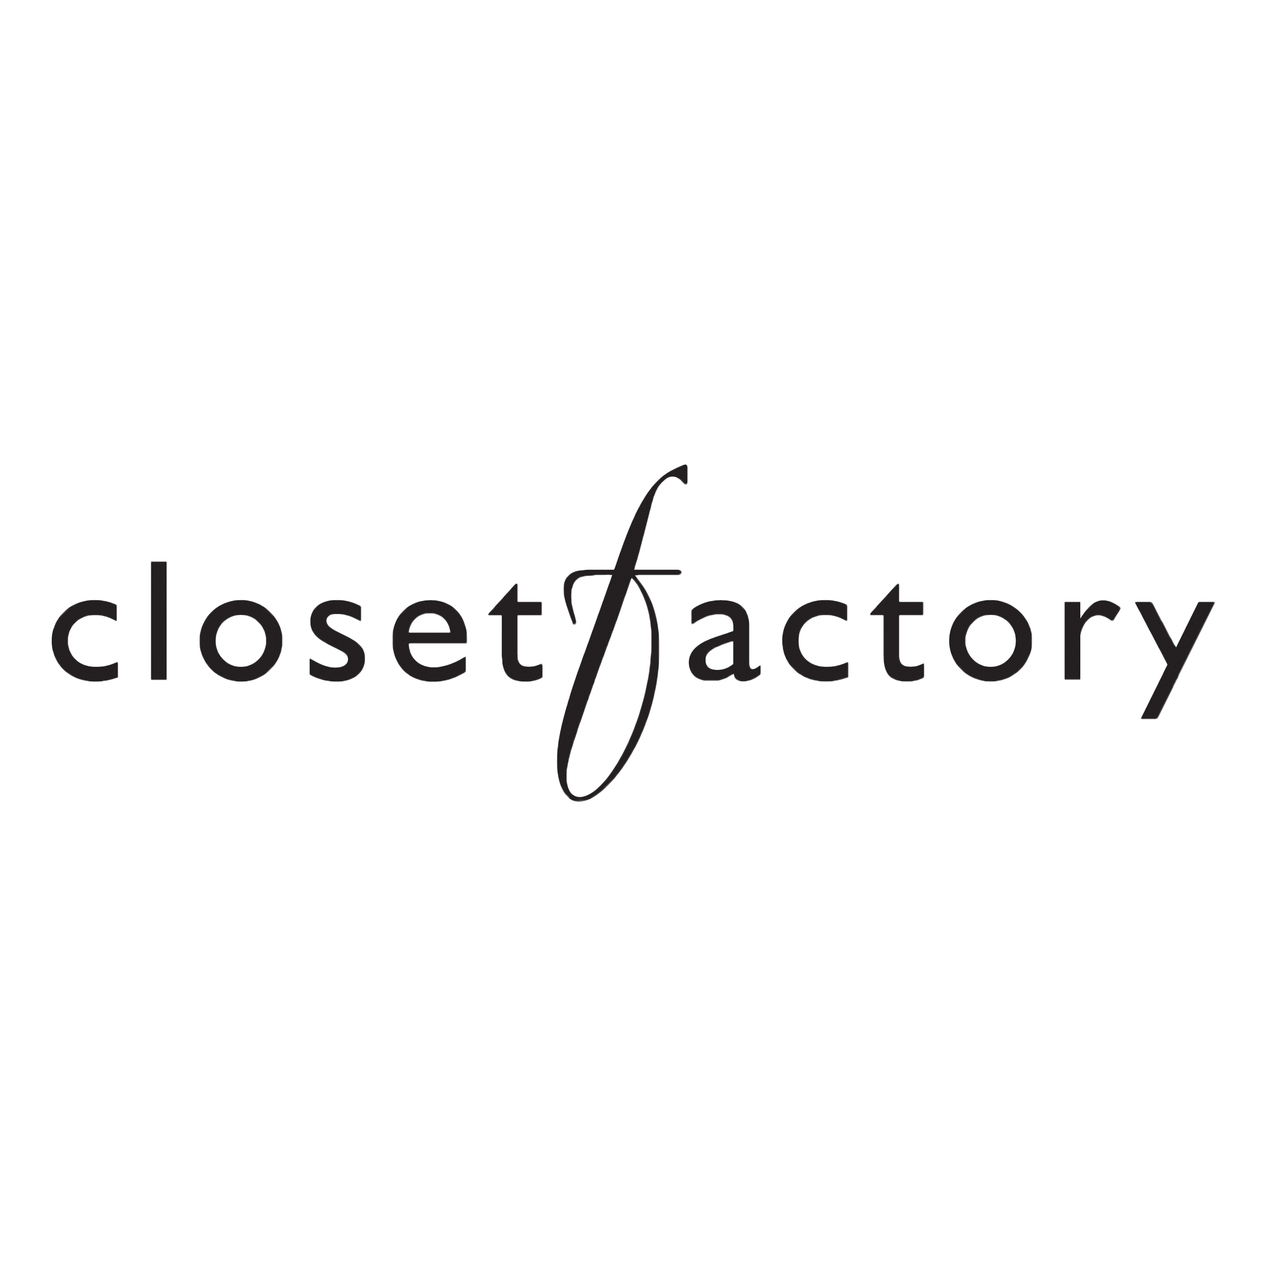 Closet Factory .